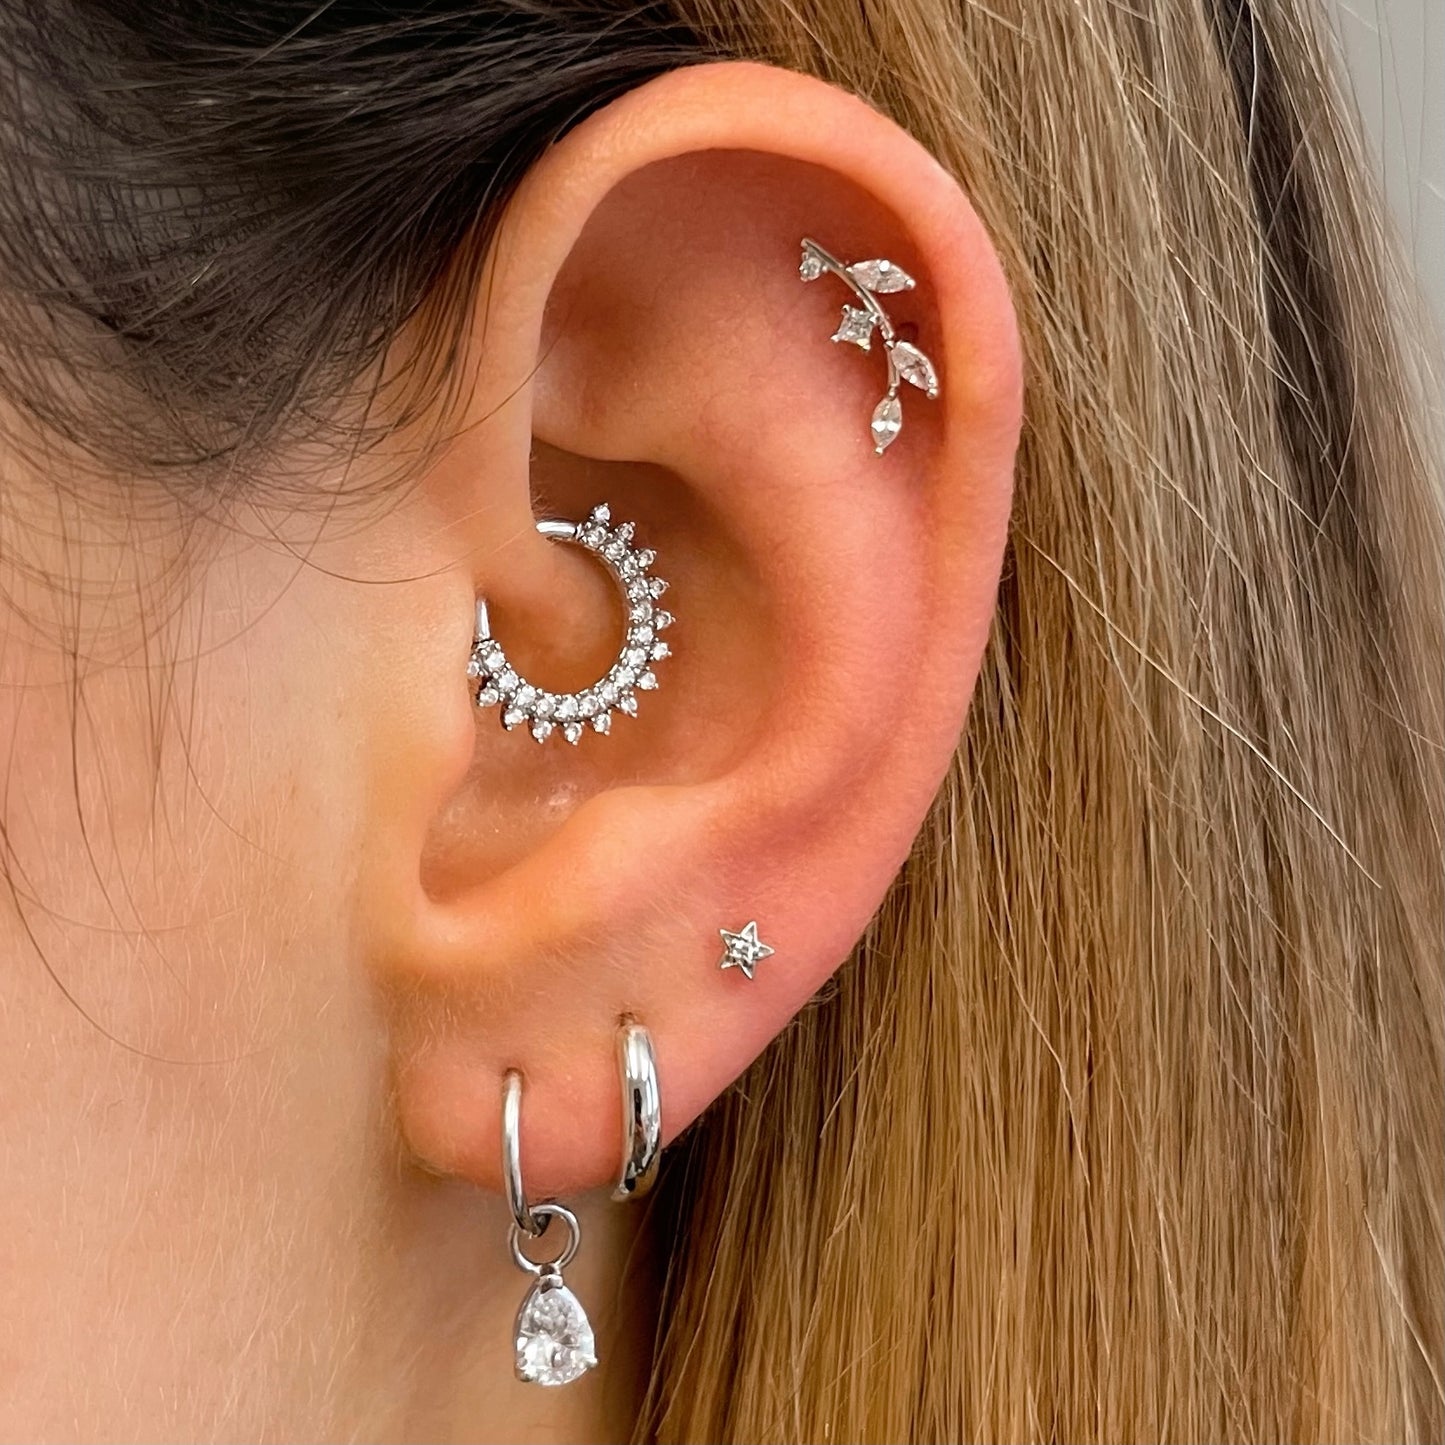 9k solid white gold Nova star flat back labret stud earring - Laura Bond Jewellery